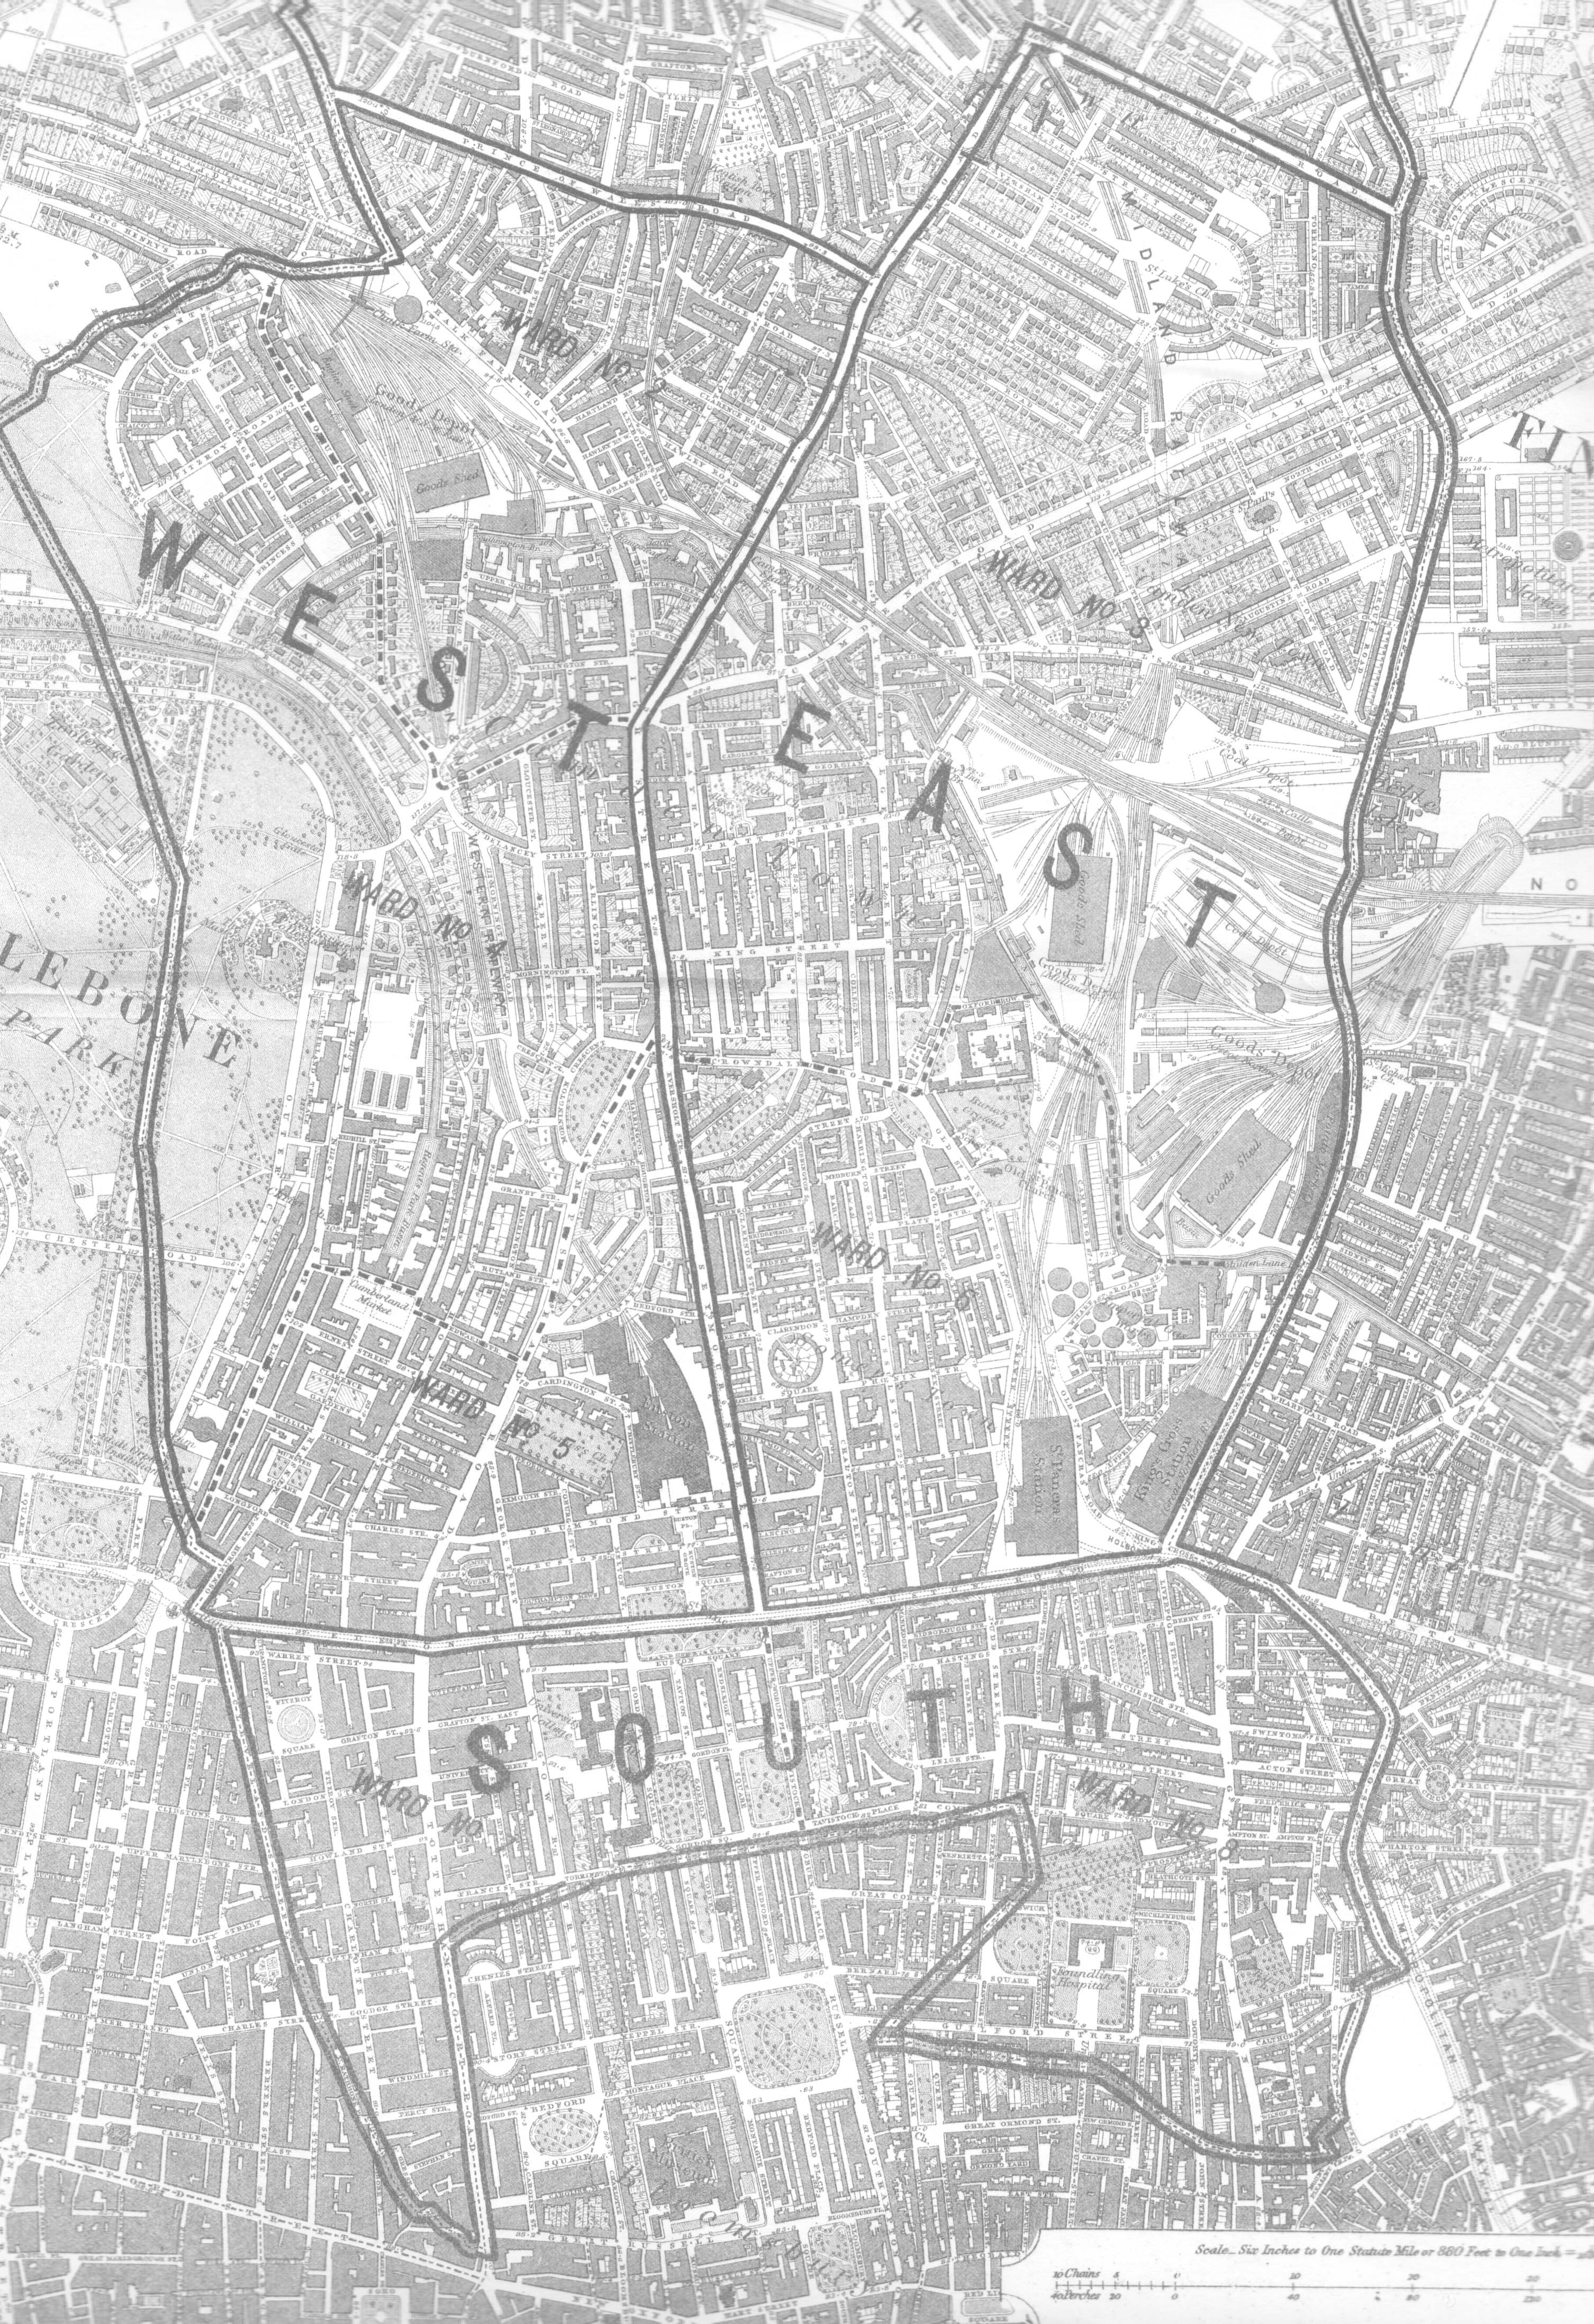 Map of the Borough of St. Pancras